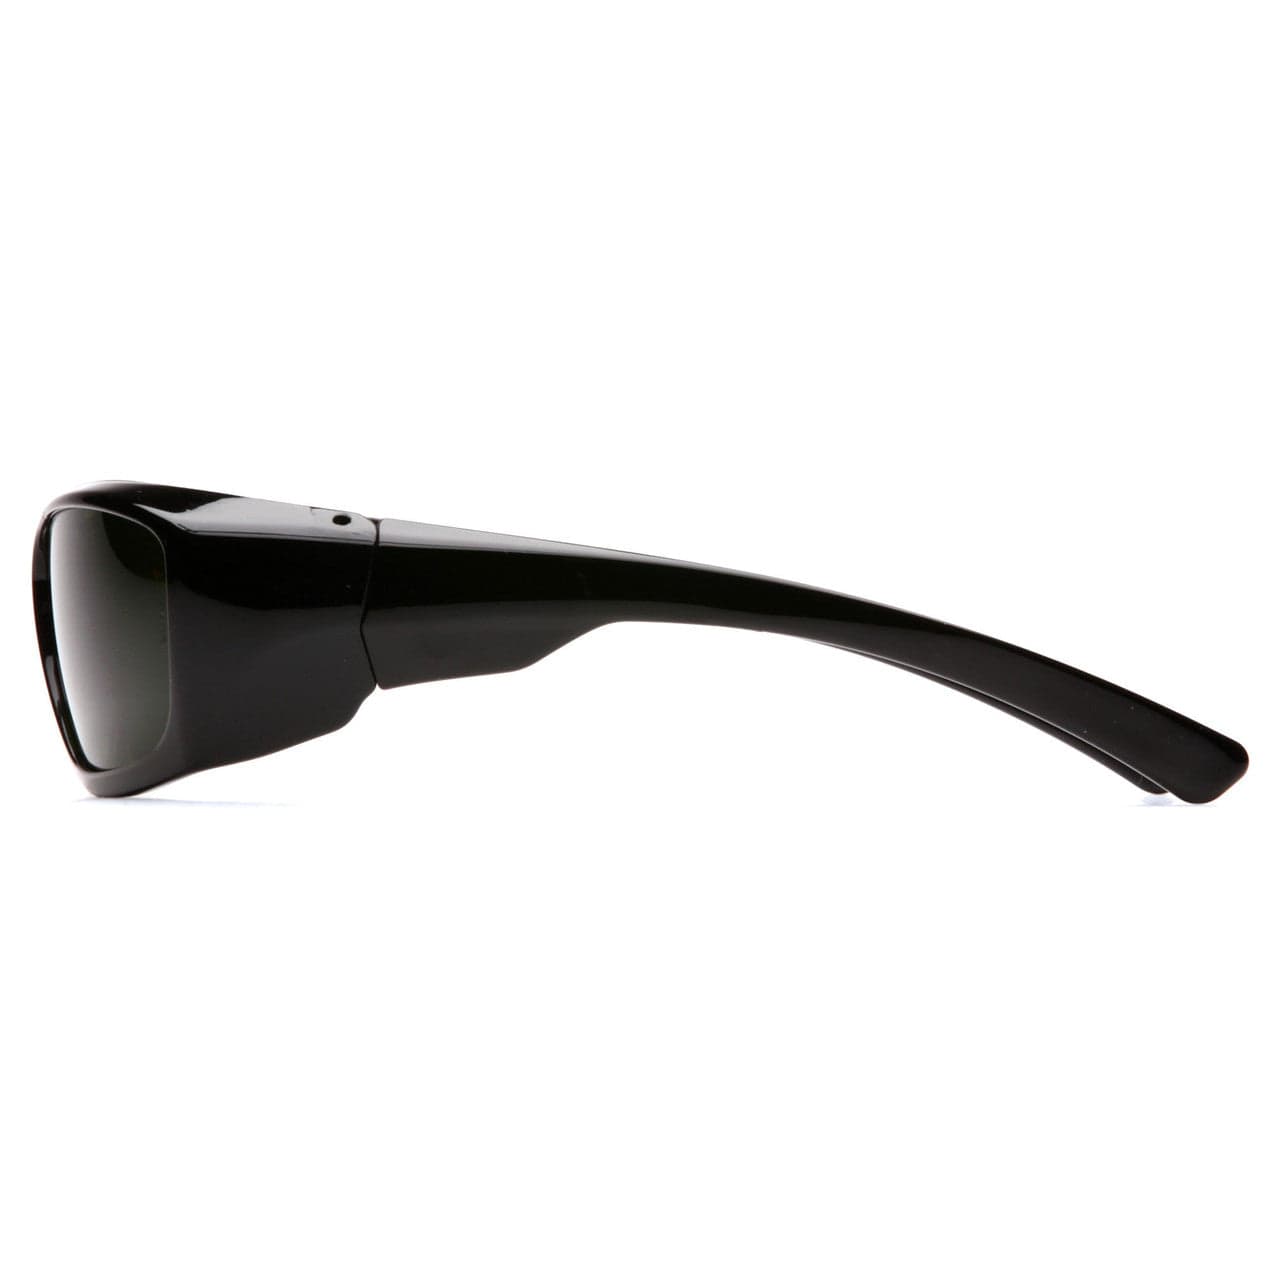 Pyramex Emerge Safety Glasses Black Frame IR Shade 3.0 Lens SB7960SF Side